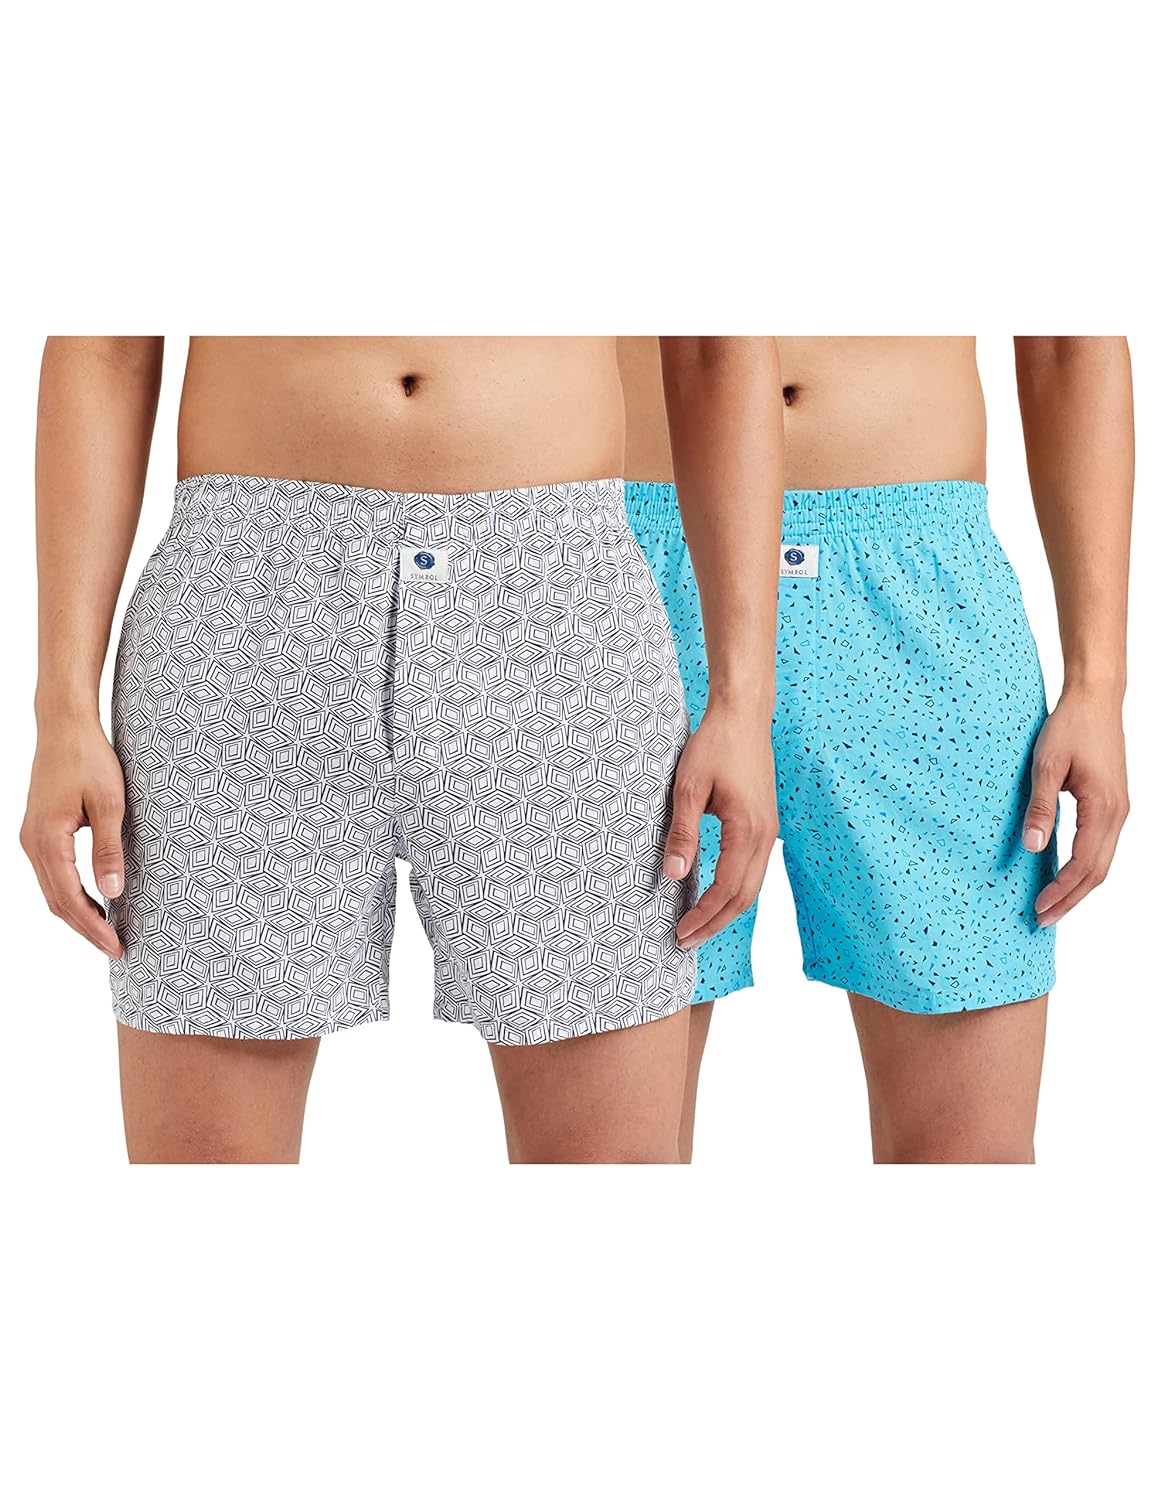 Amazon Brand - Symbol Men's Cotton Regular Boxer Shorts